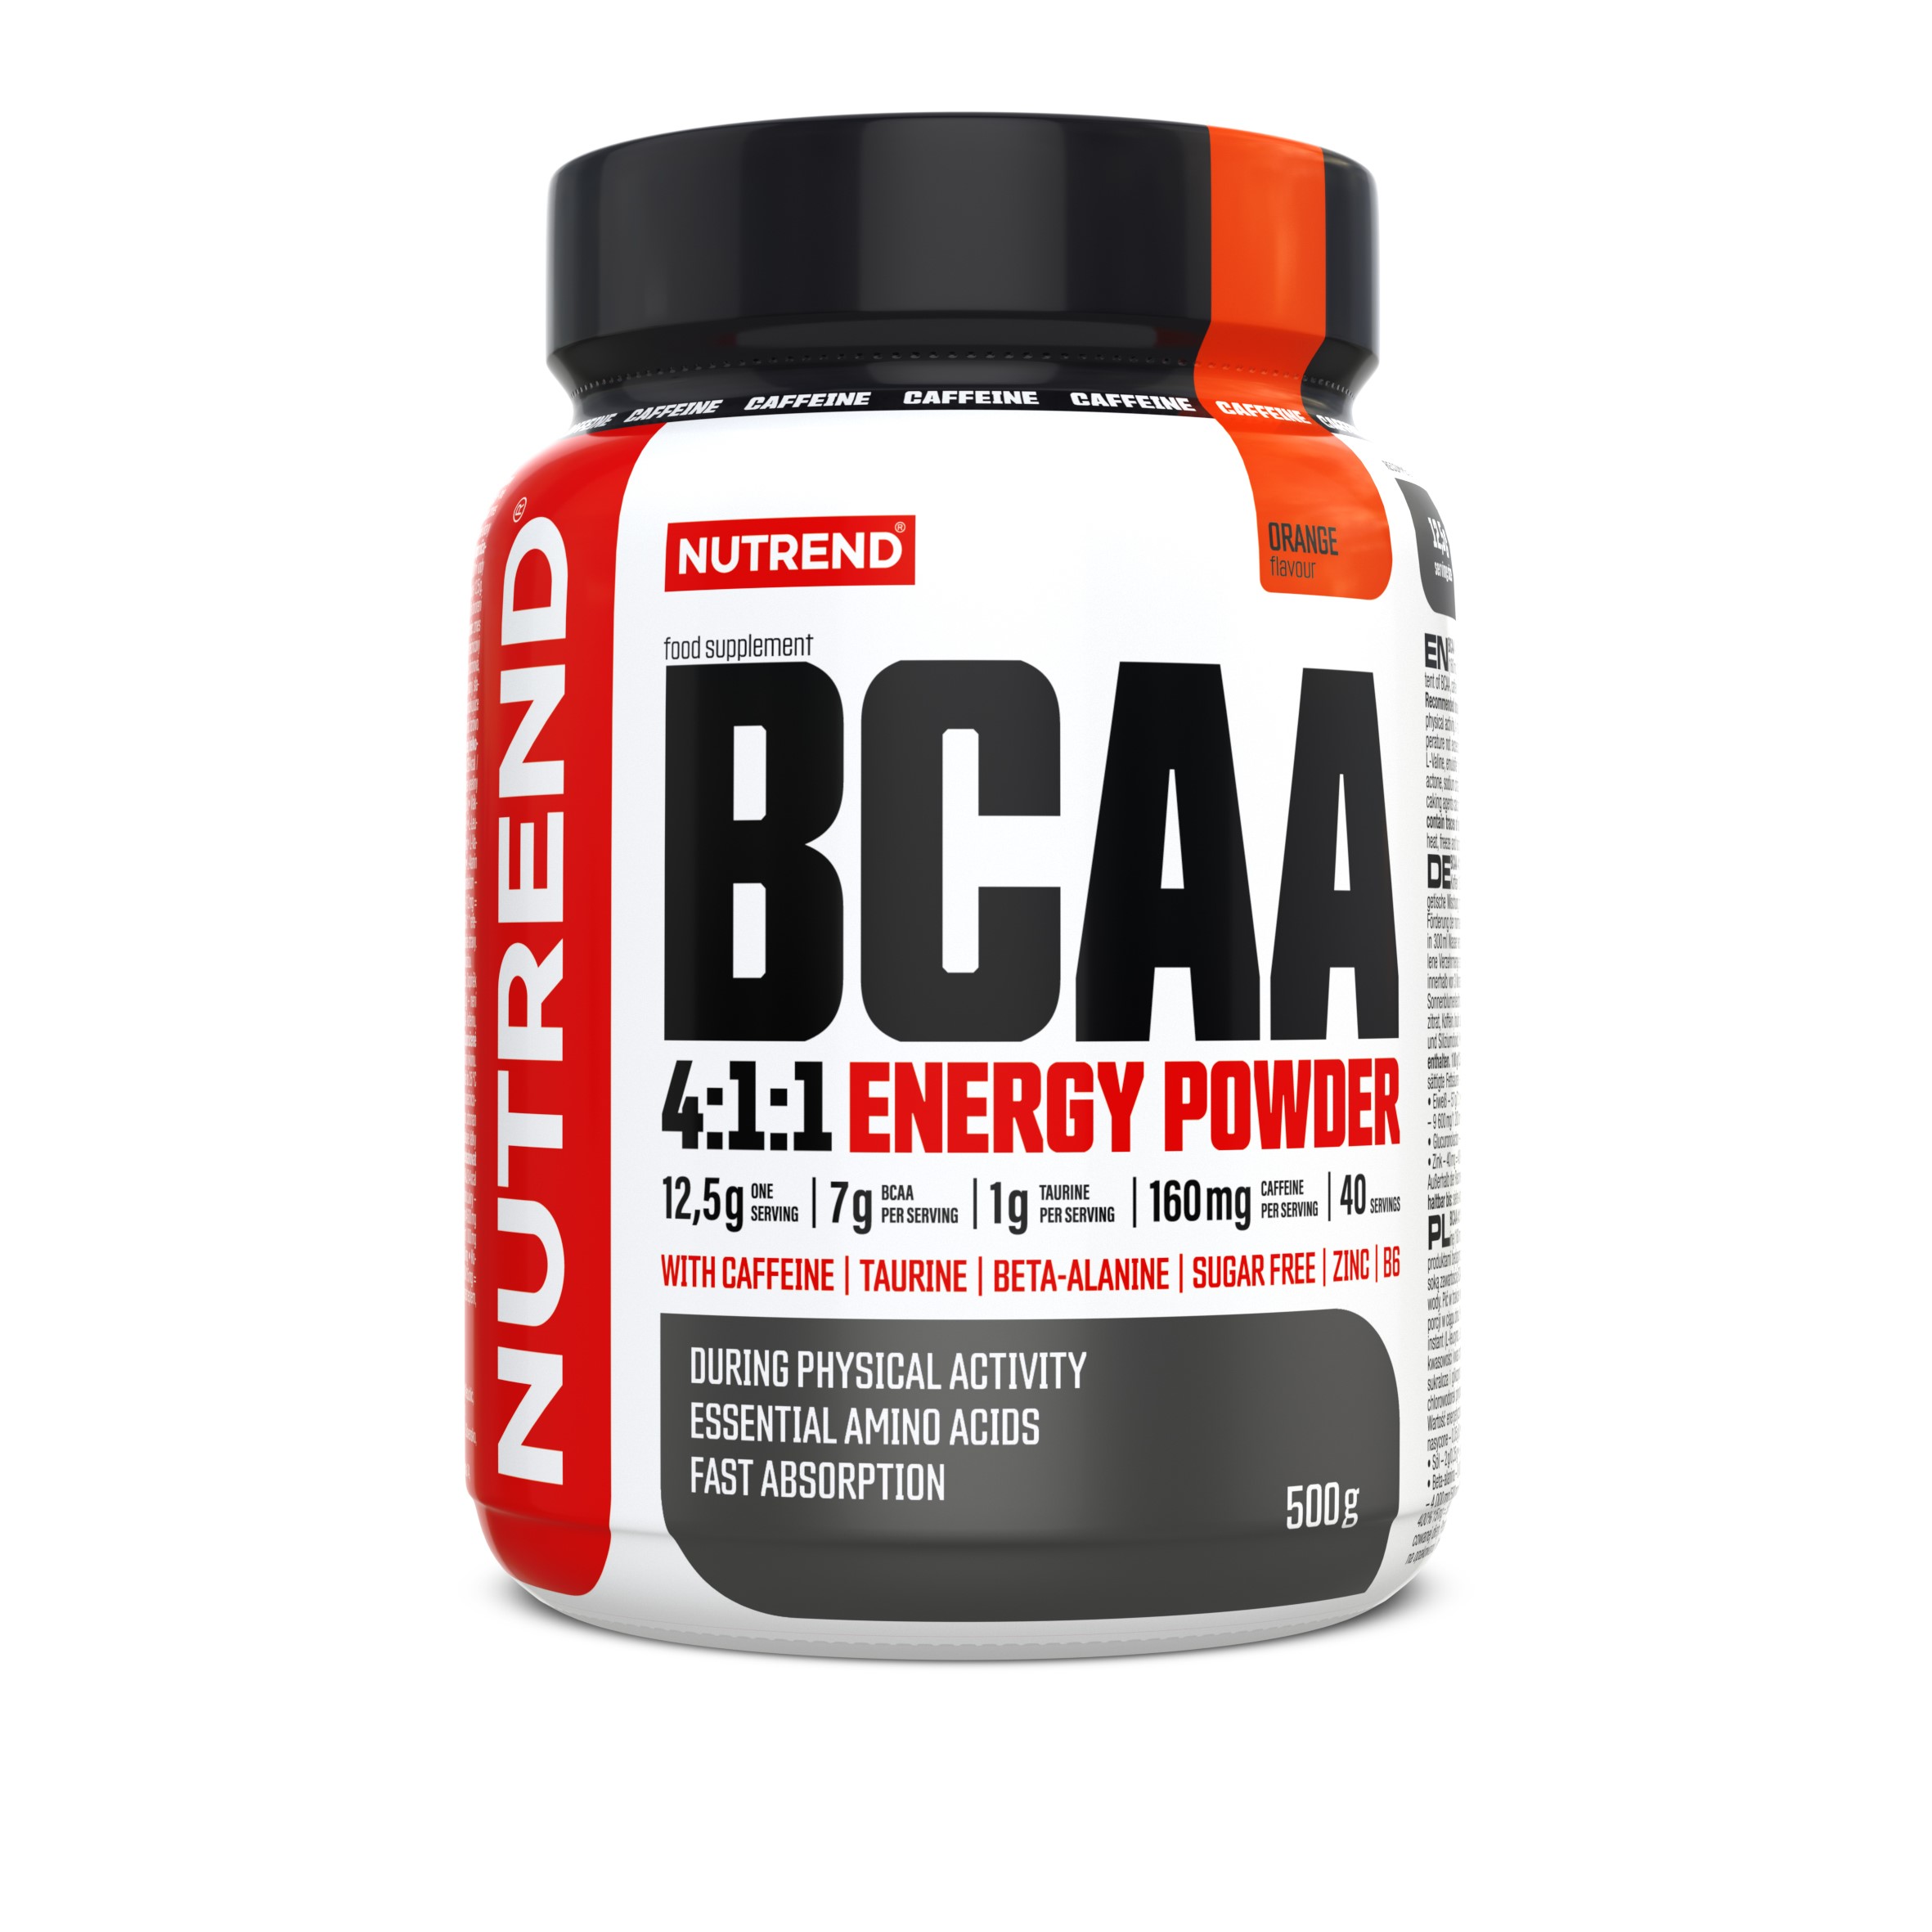 BCAA - BCAA 4:1:1 ENERGY POWDER 500g, advancednutrition.ro